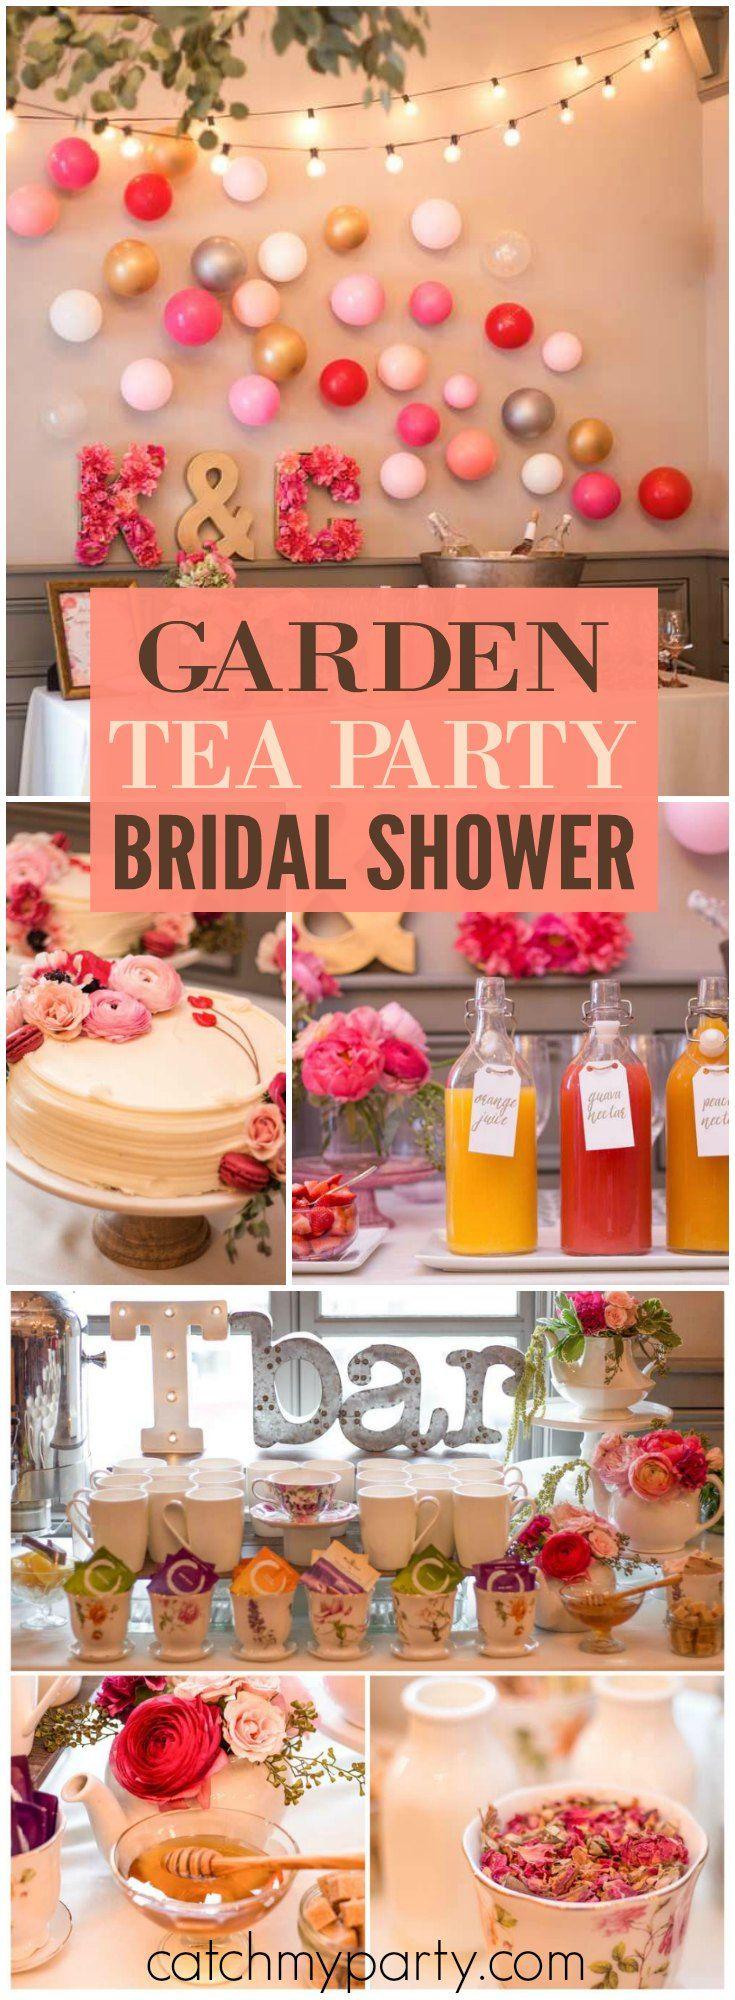 Hochzeit - Garden Tea Party / Bridal/Wedding Shower "Kimberly' S Garden Tea Party"